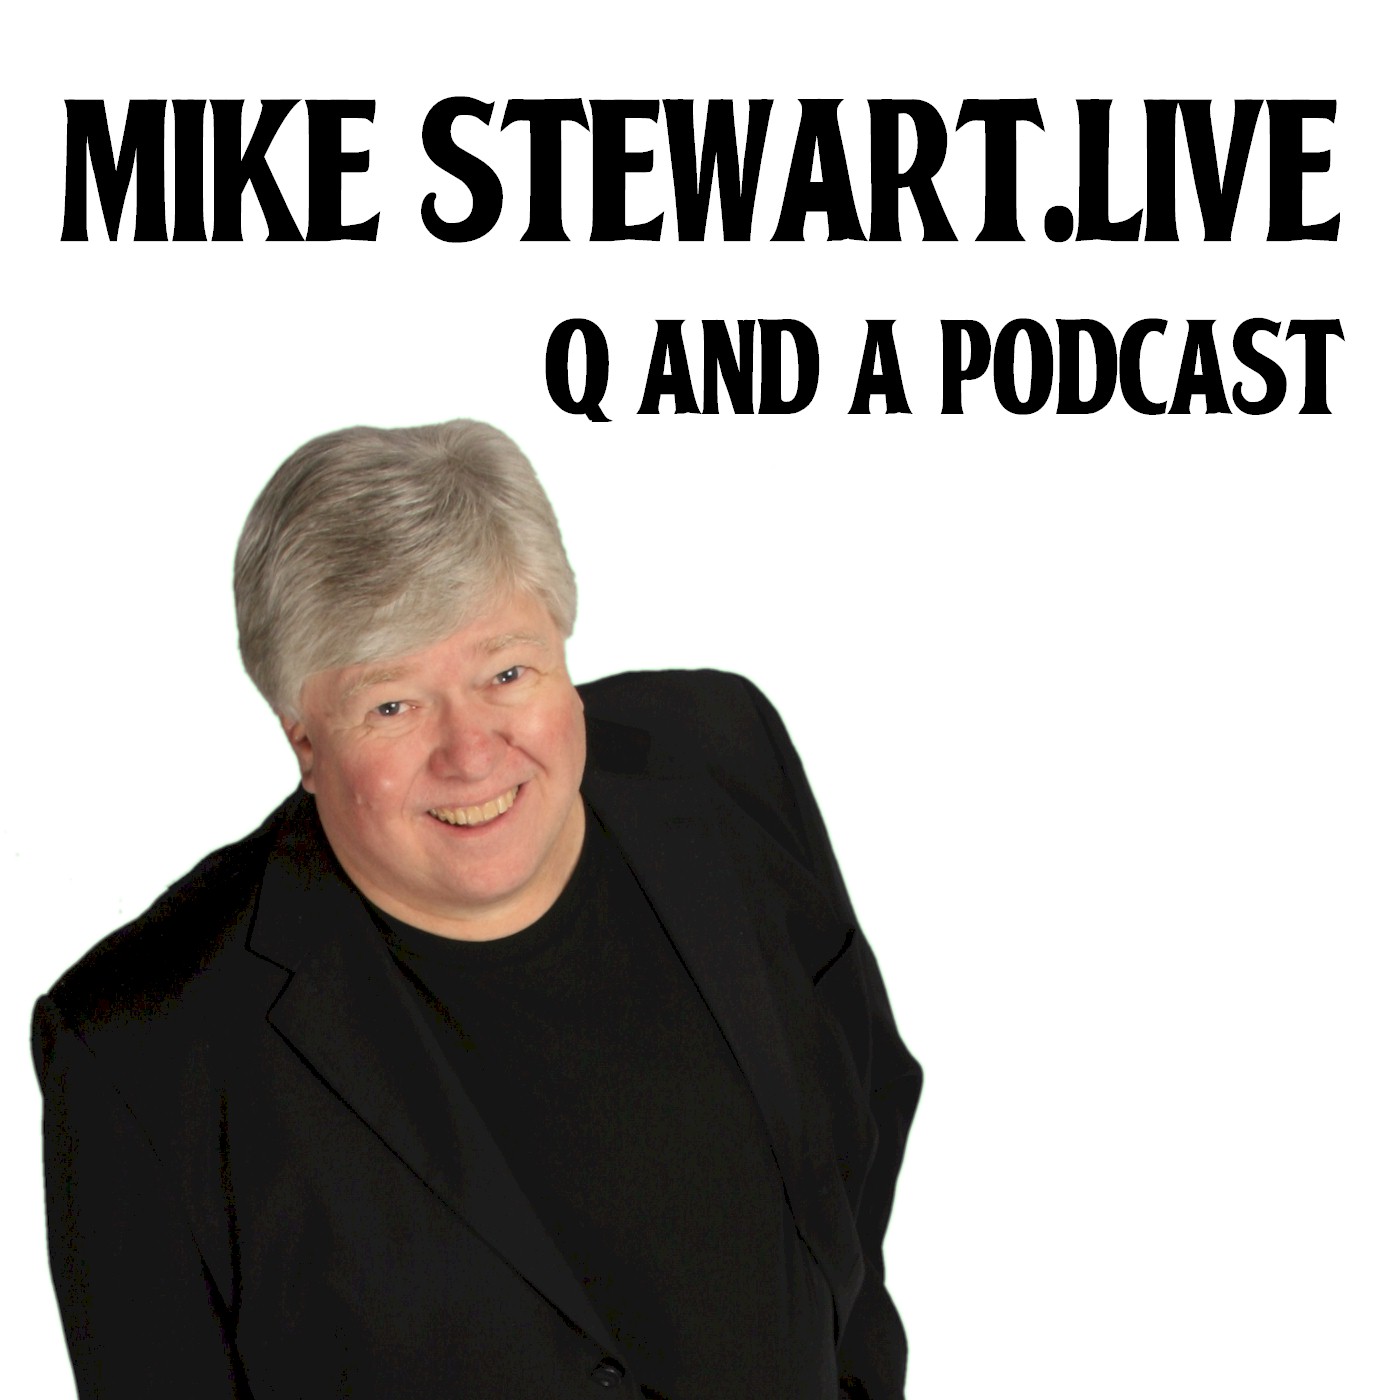 Mike Stewart Live